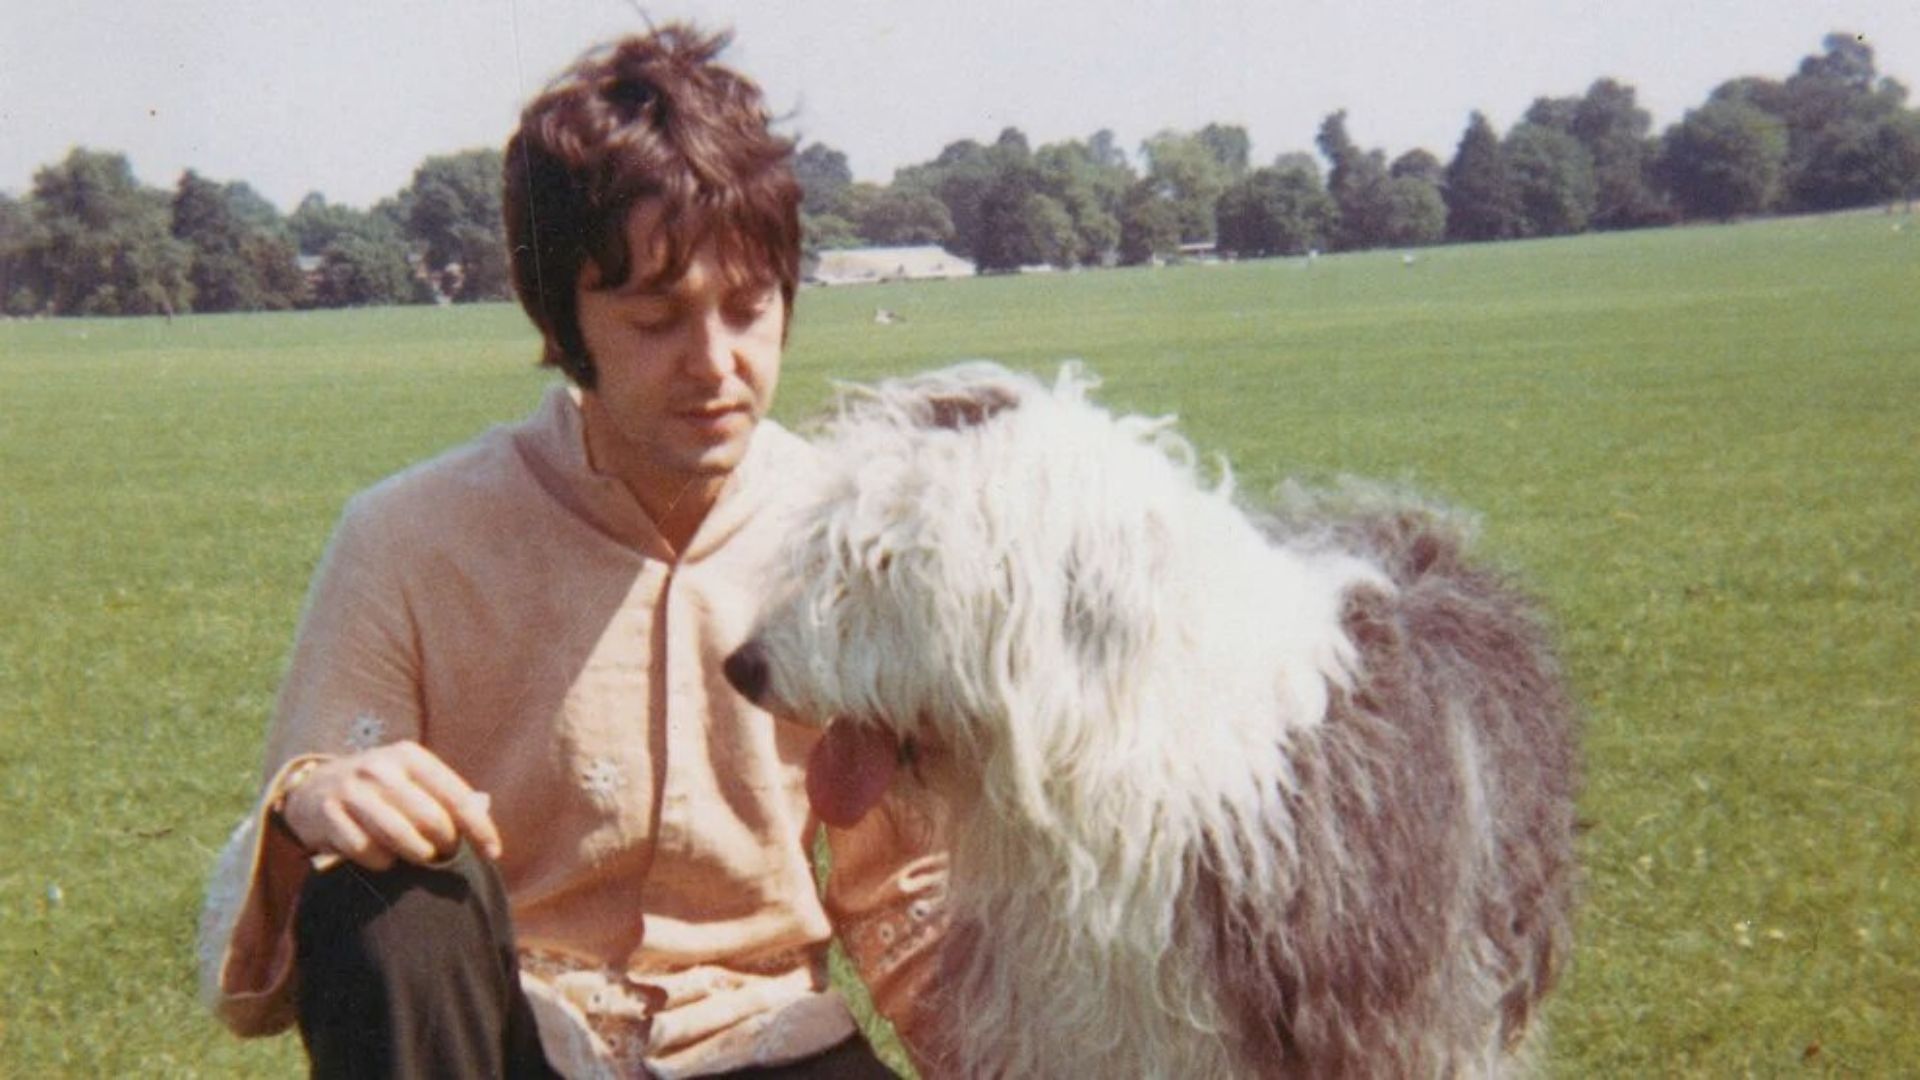 La mascota que inspiró a Paul McCartney a escribir “Martha, my dear”